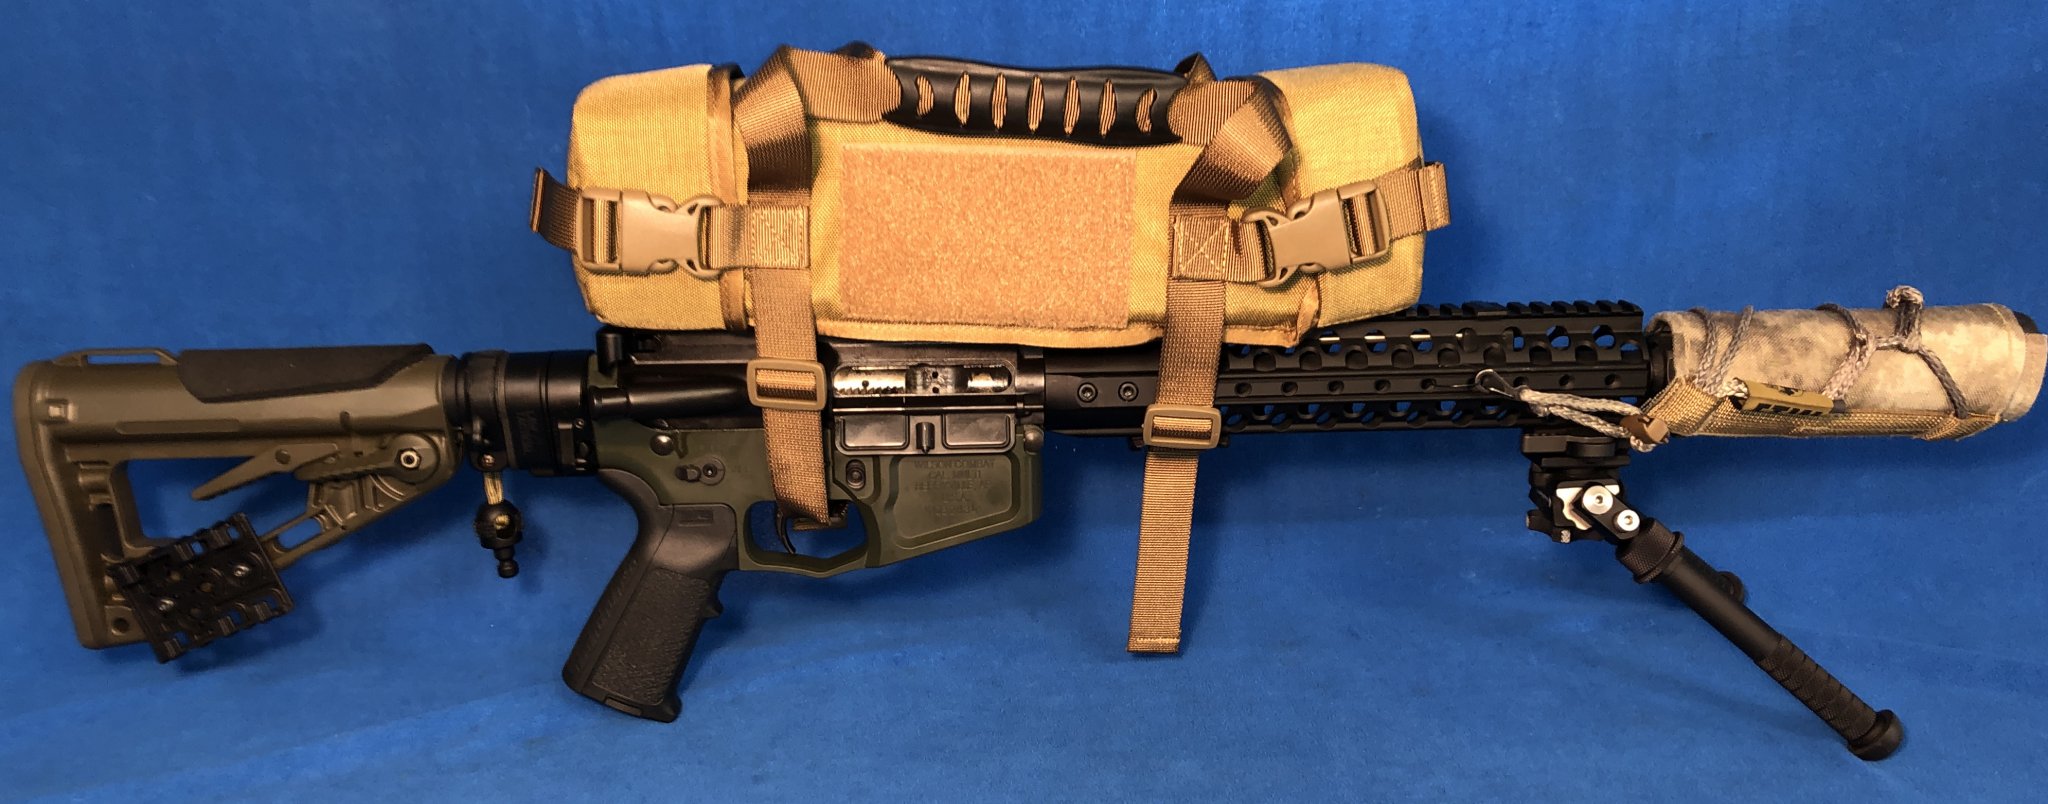 Rifle Scopes Finally Arrived S B Short Dot Dual CC Sniper S Hide Forum